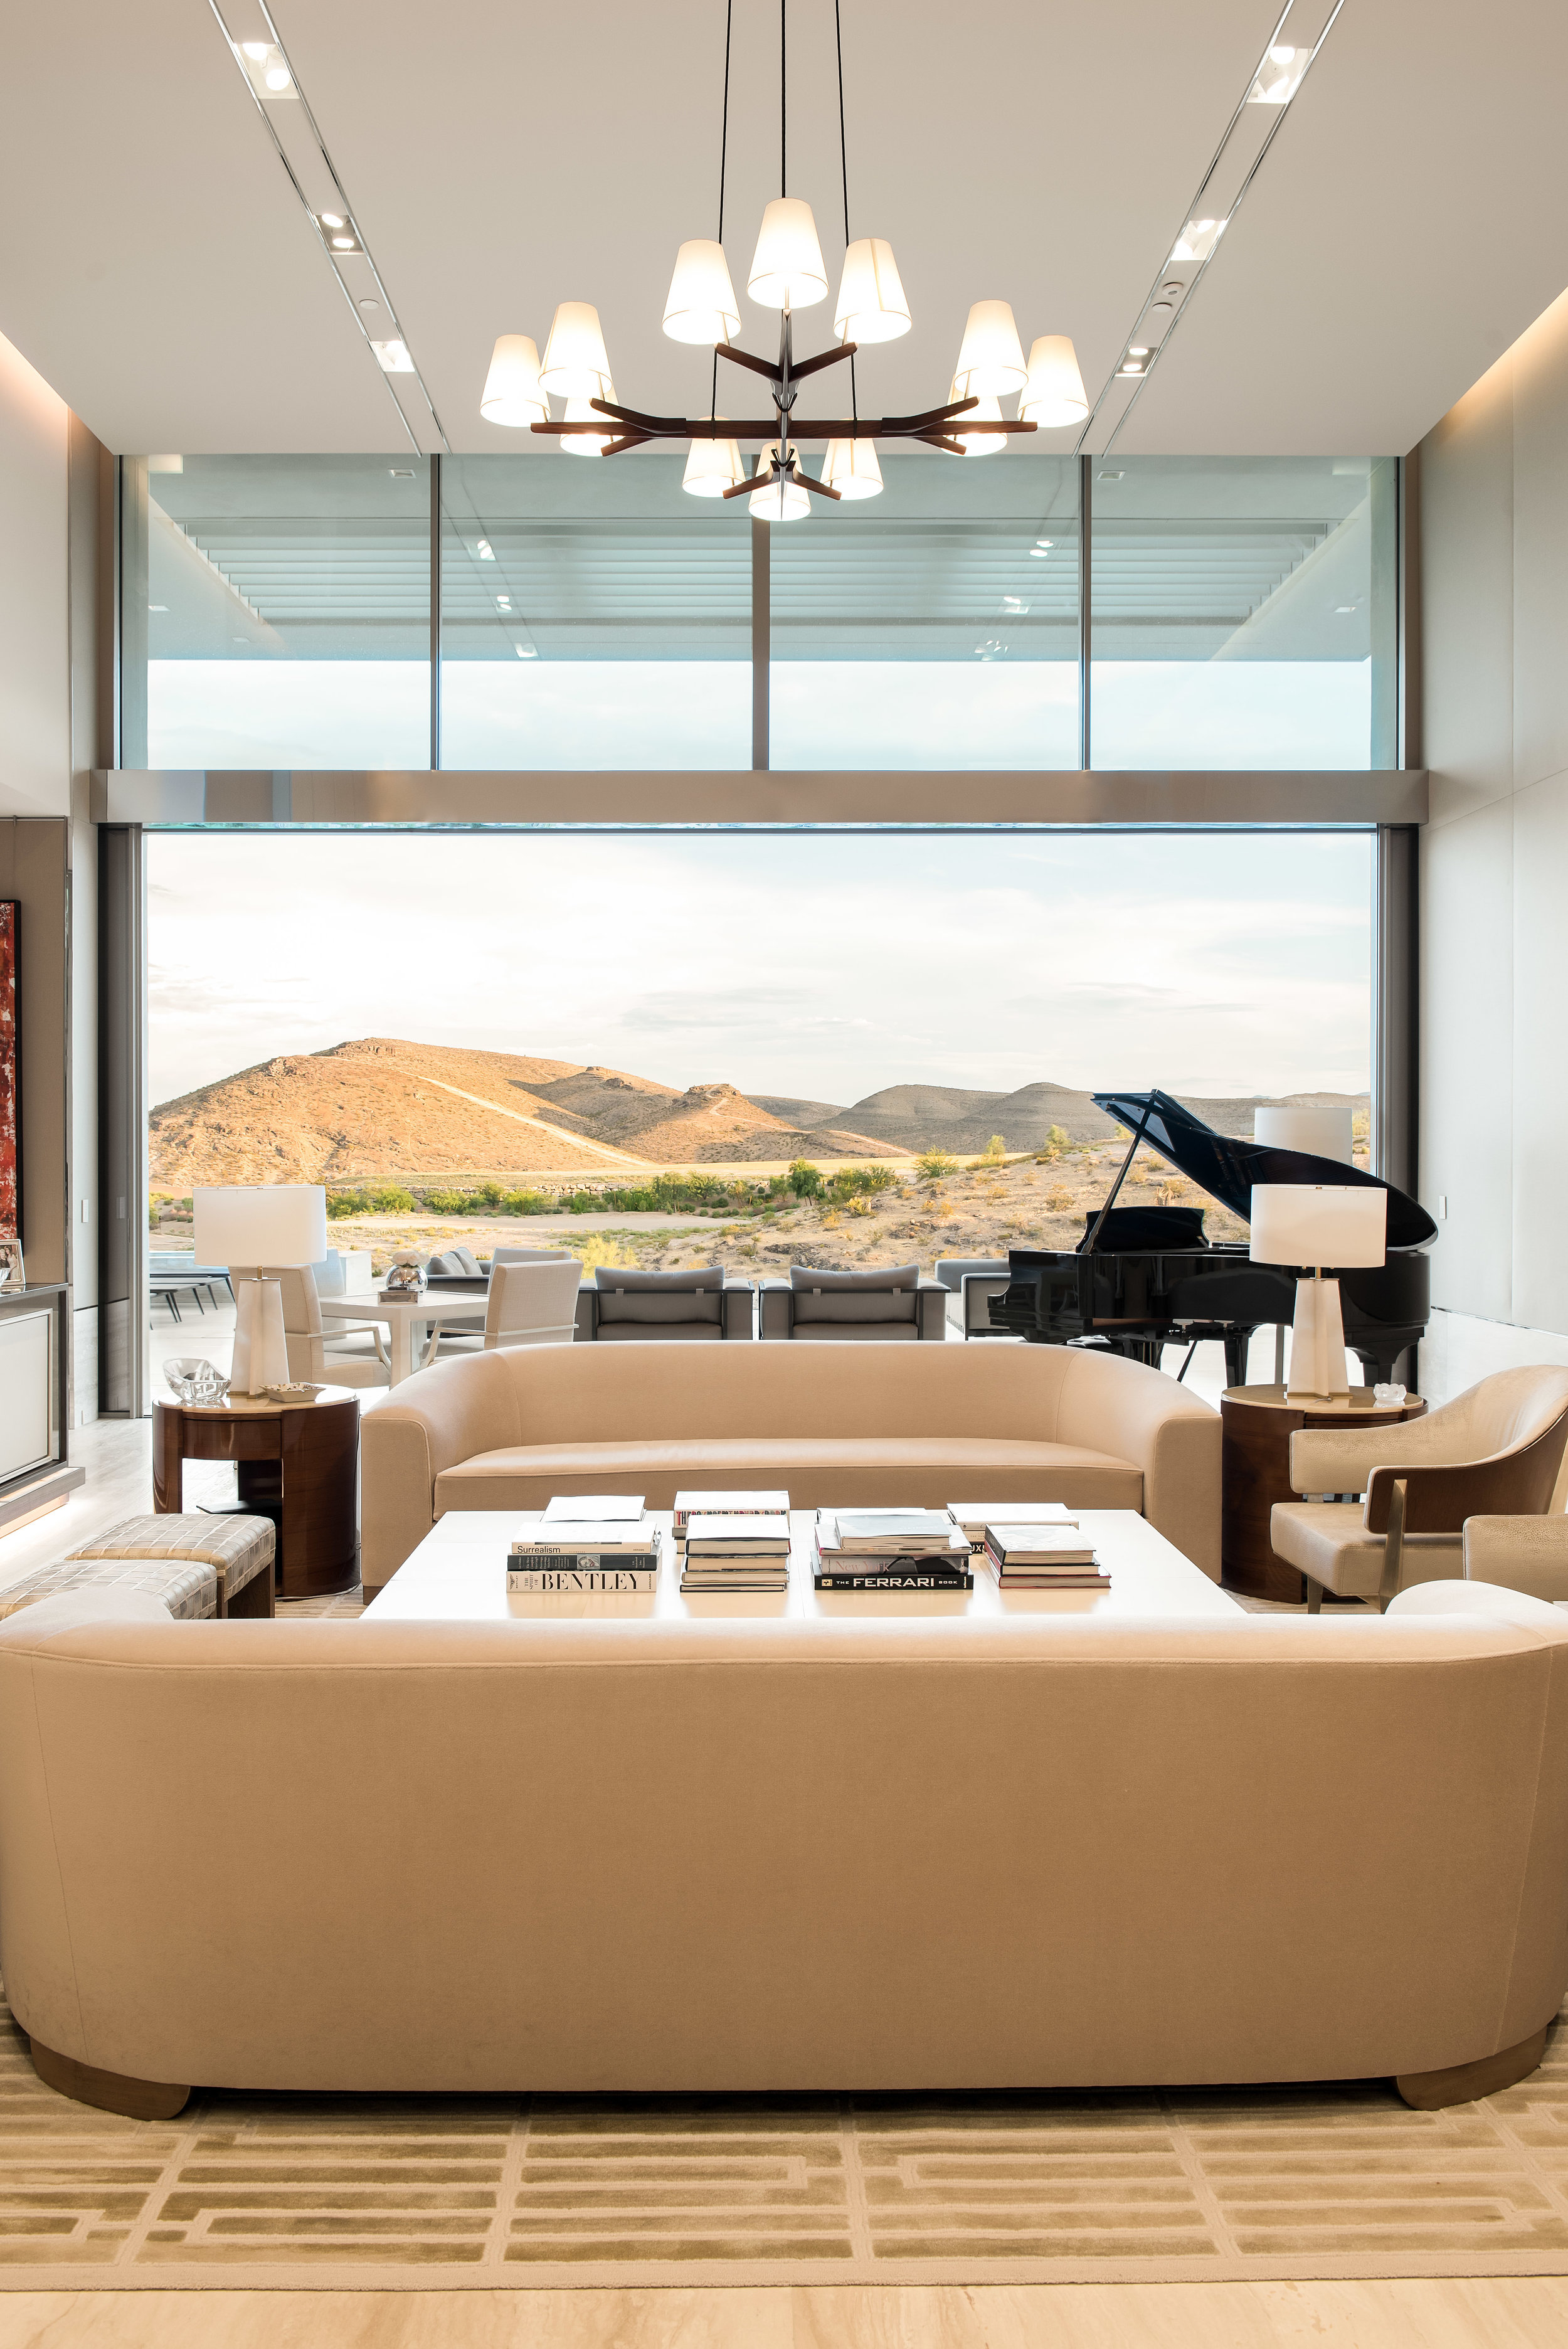 Luxury interior overlooking The Summit Club Golf Course, Las Vegas, NV.